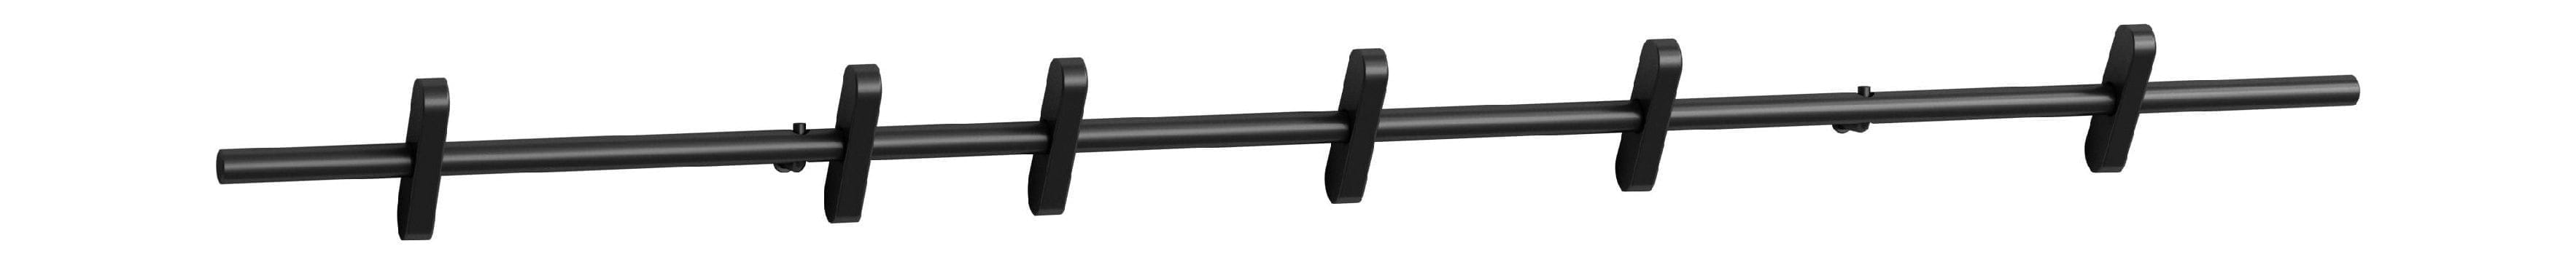 Moebe Hook Bar 70 cm, schwarz